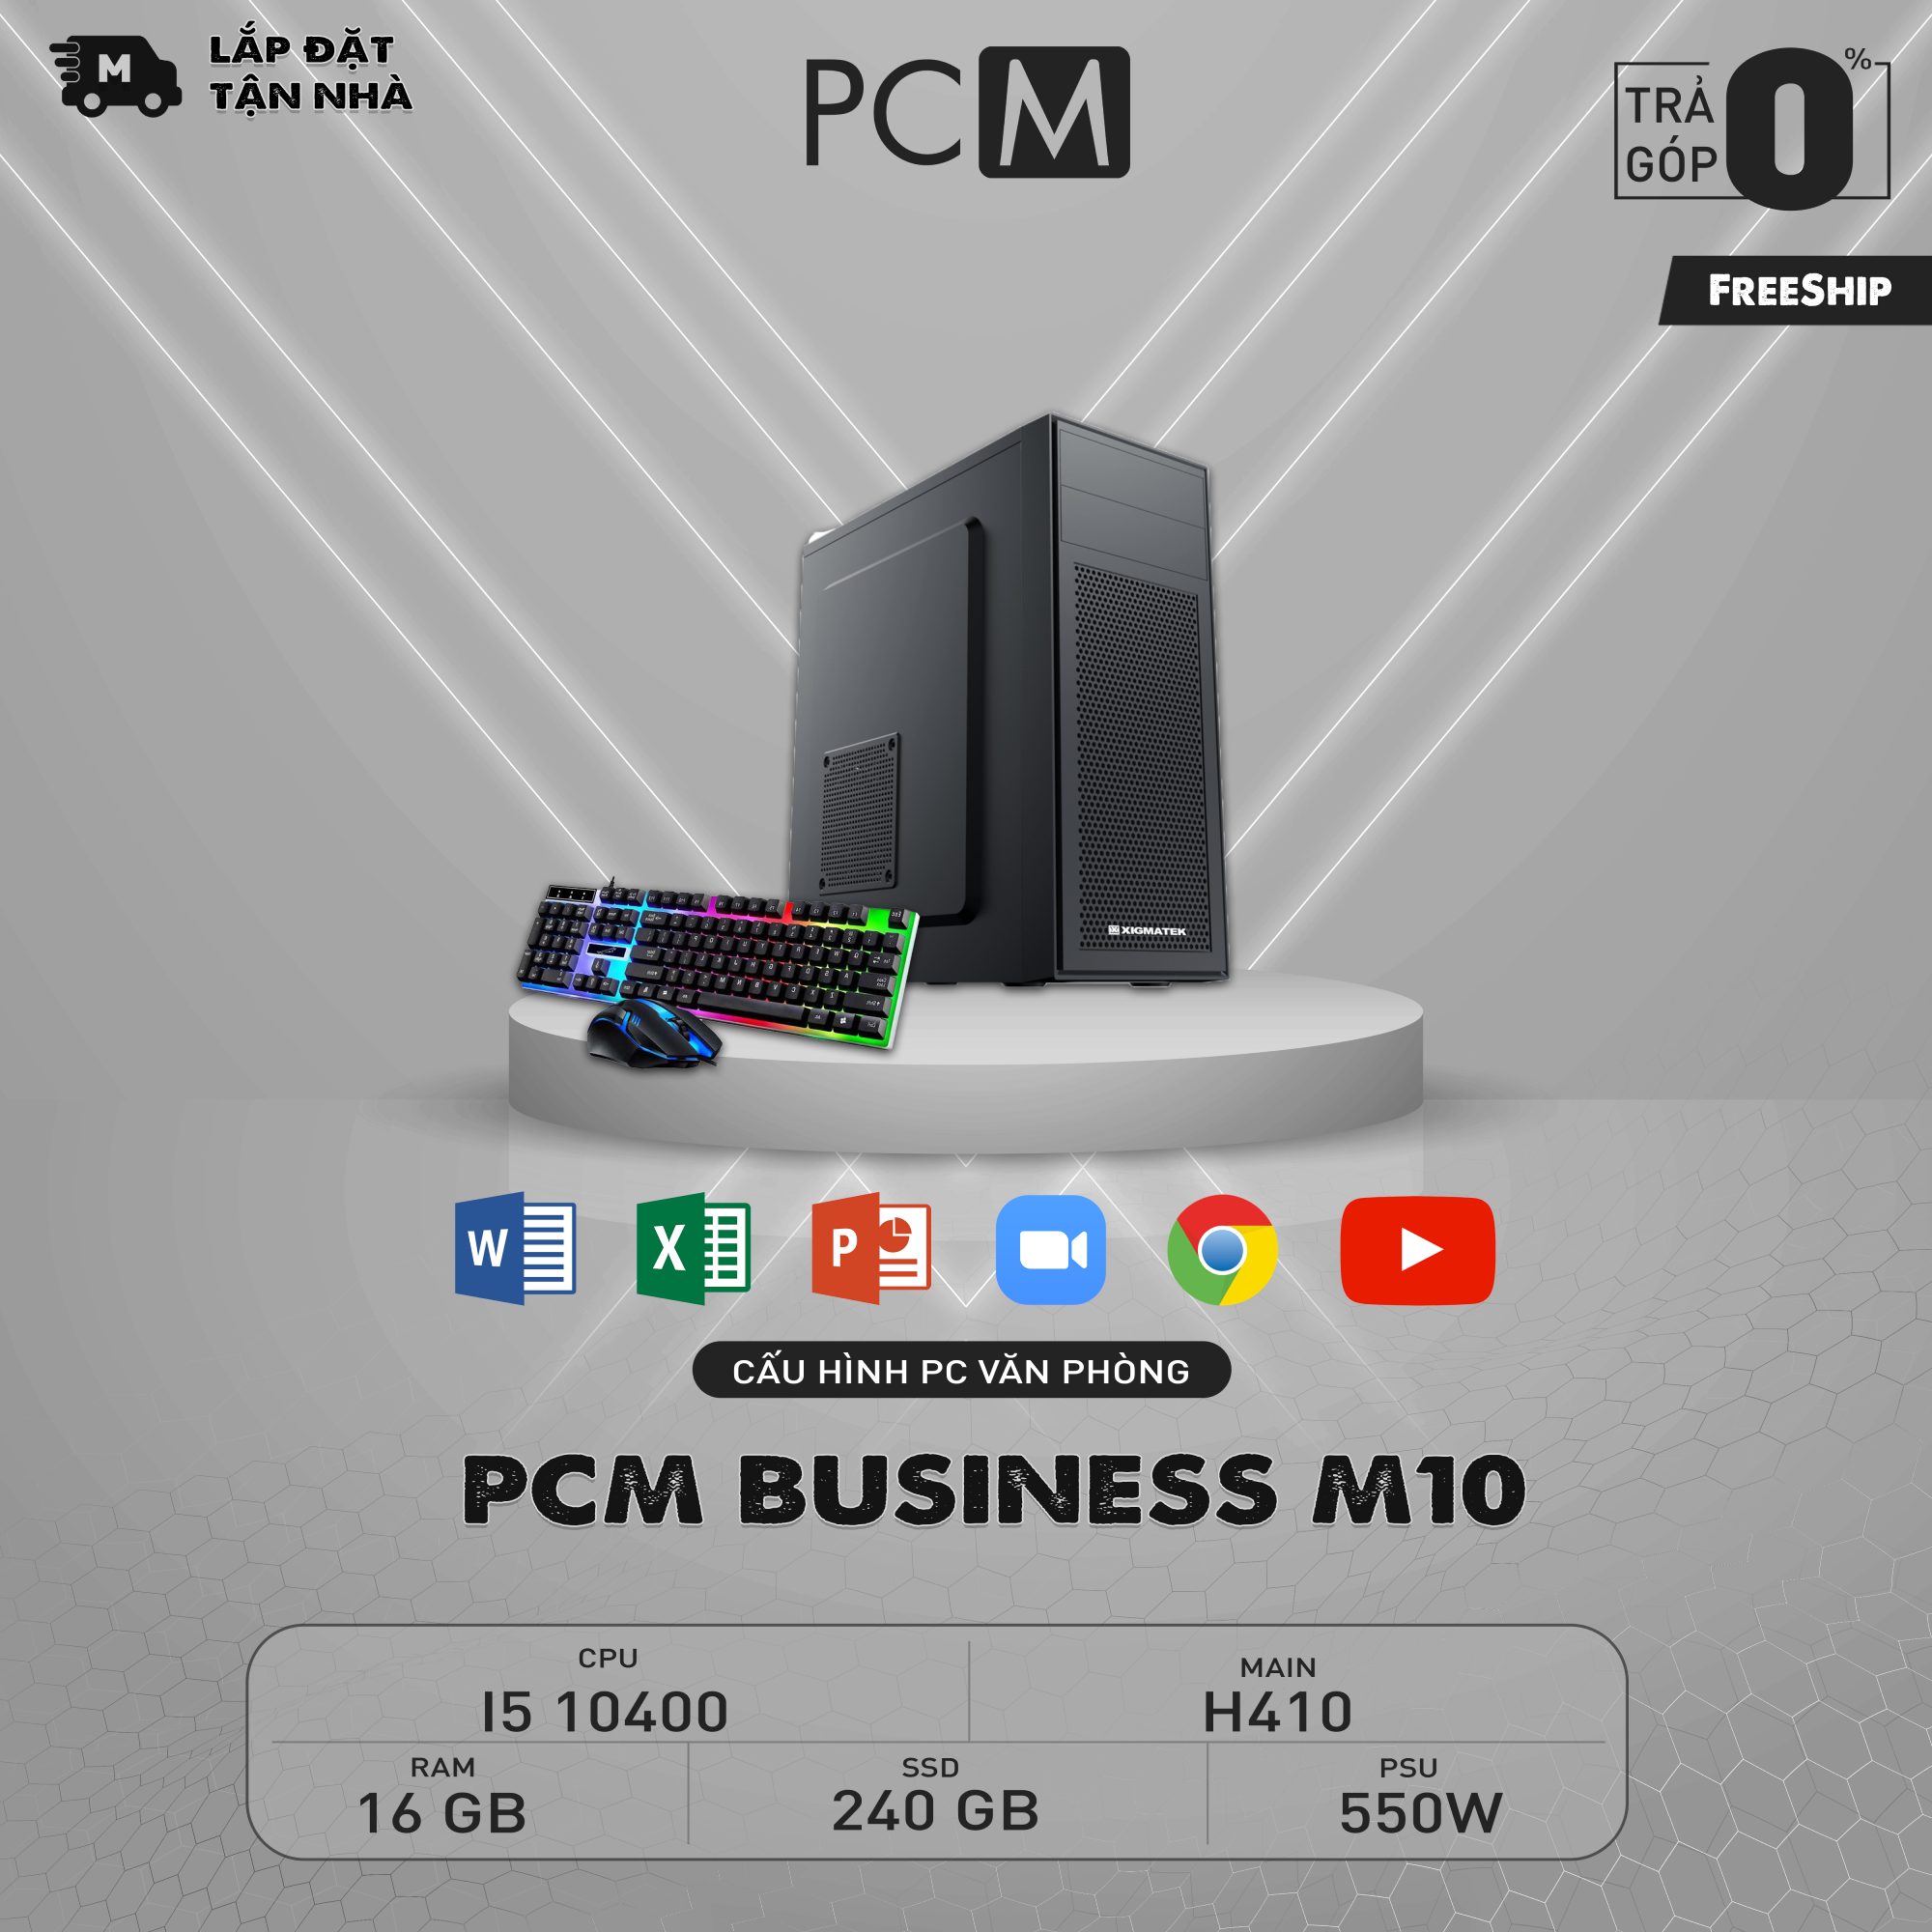 PCM BUSINESS M10 (I5 10400/16GB RAM/240GB SSD)